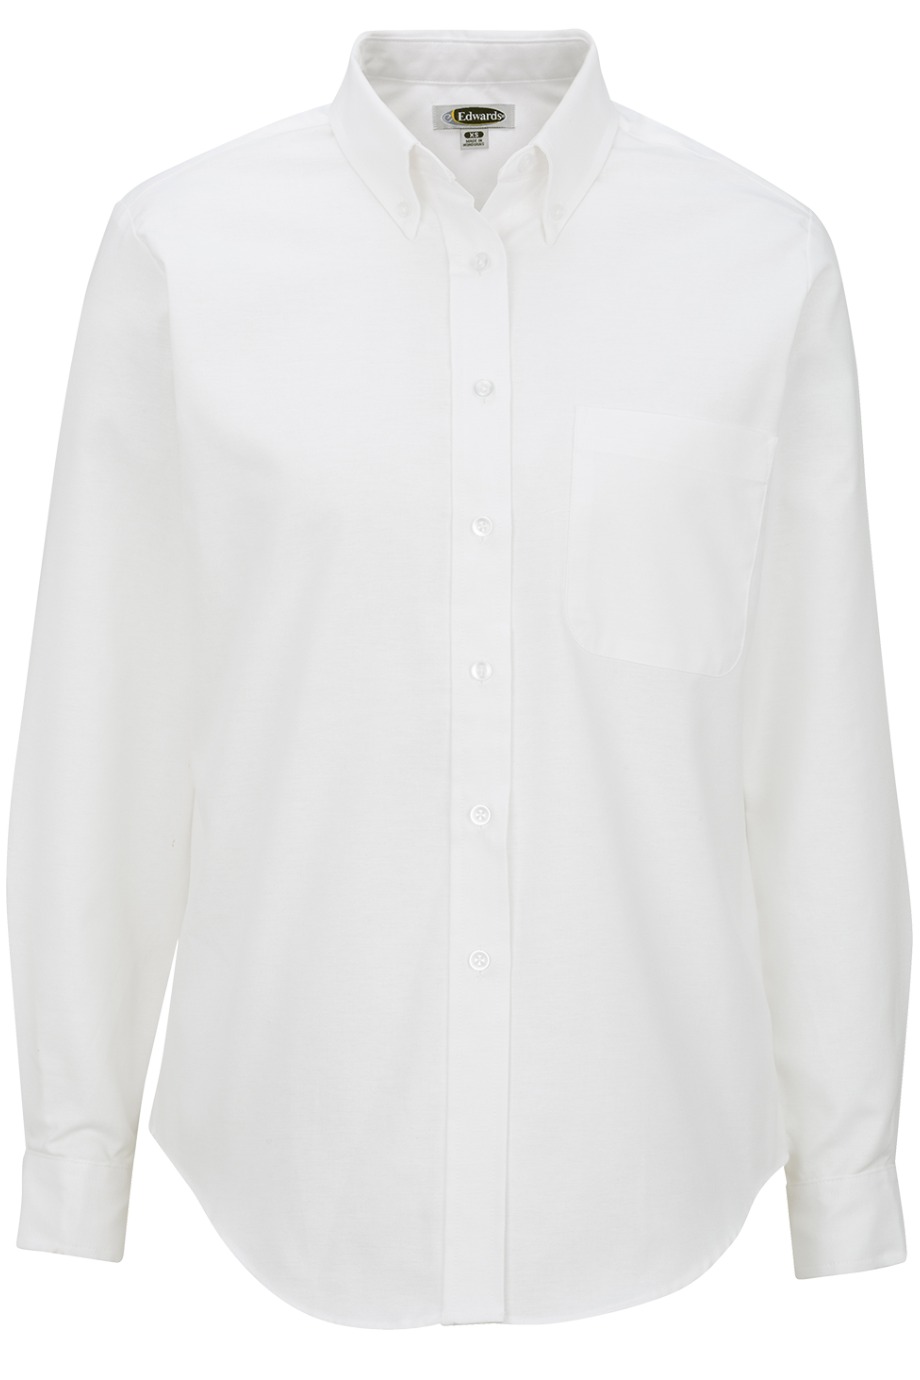 Edwards Garment 5077 - Women's Long Sleeve Dress Button Down Oxford